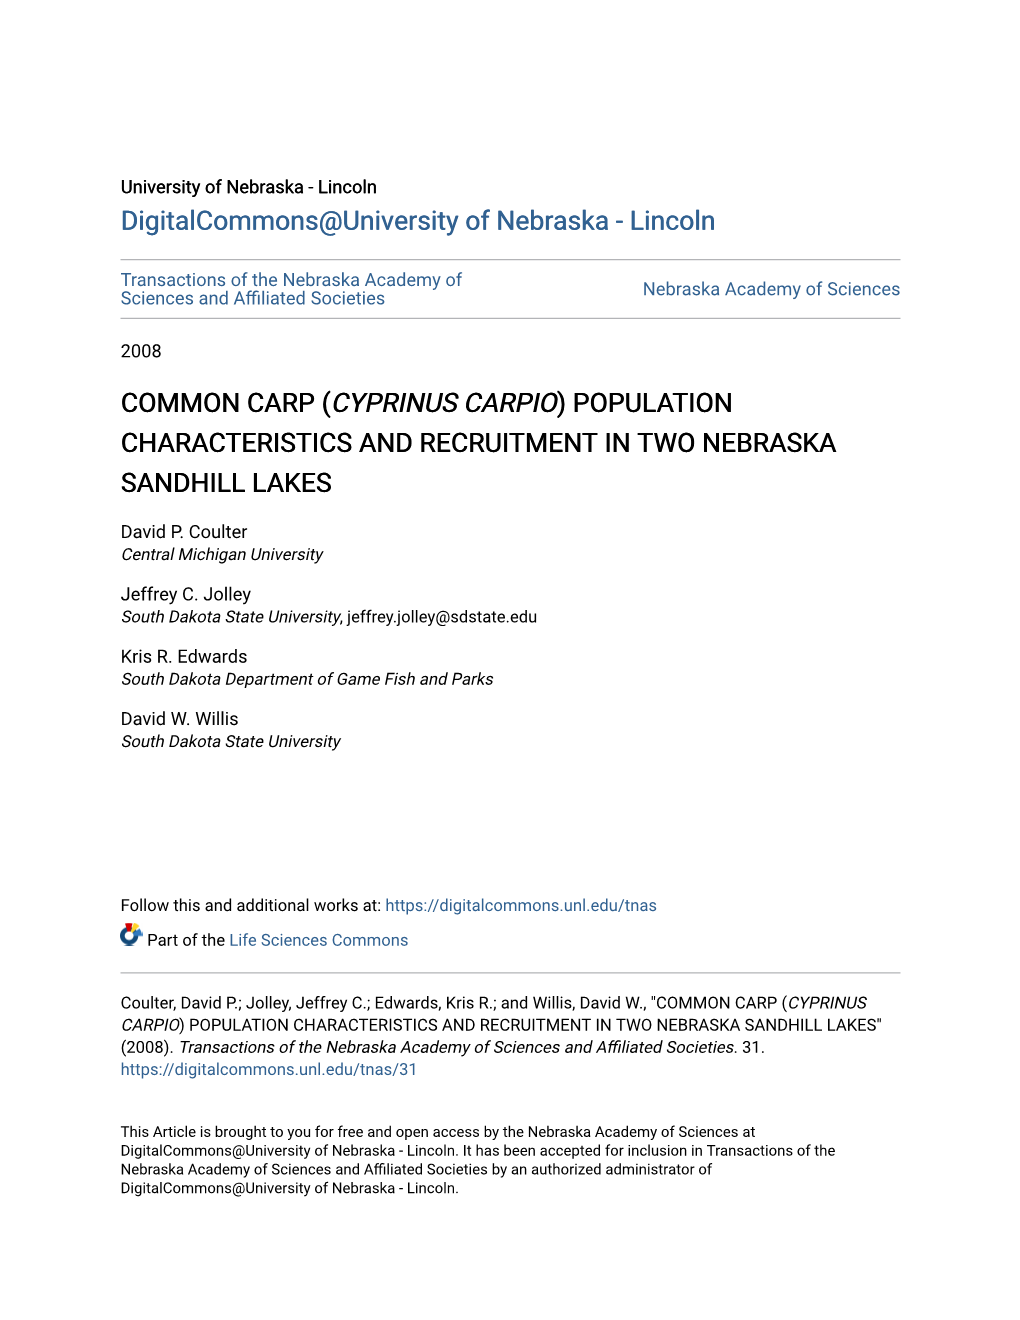 Common Carp (Cyprinus Carpio) Population Characteristics and Recruitment in Two Nebraska Sandhill Lakes